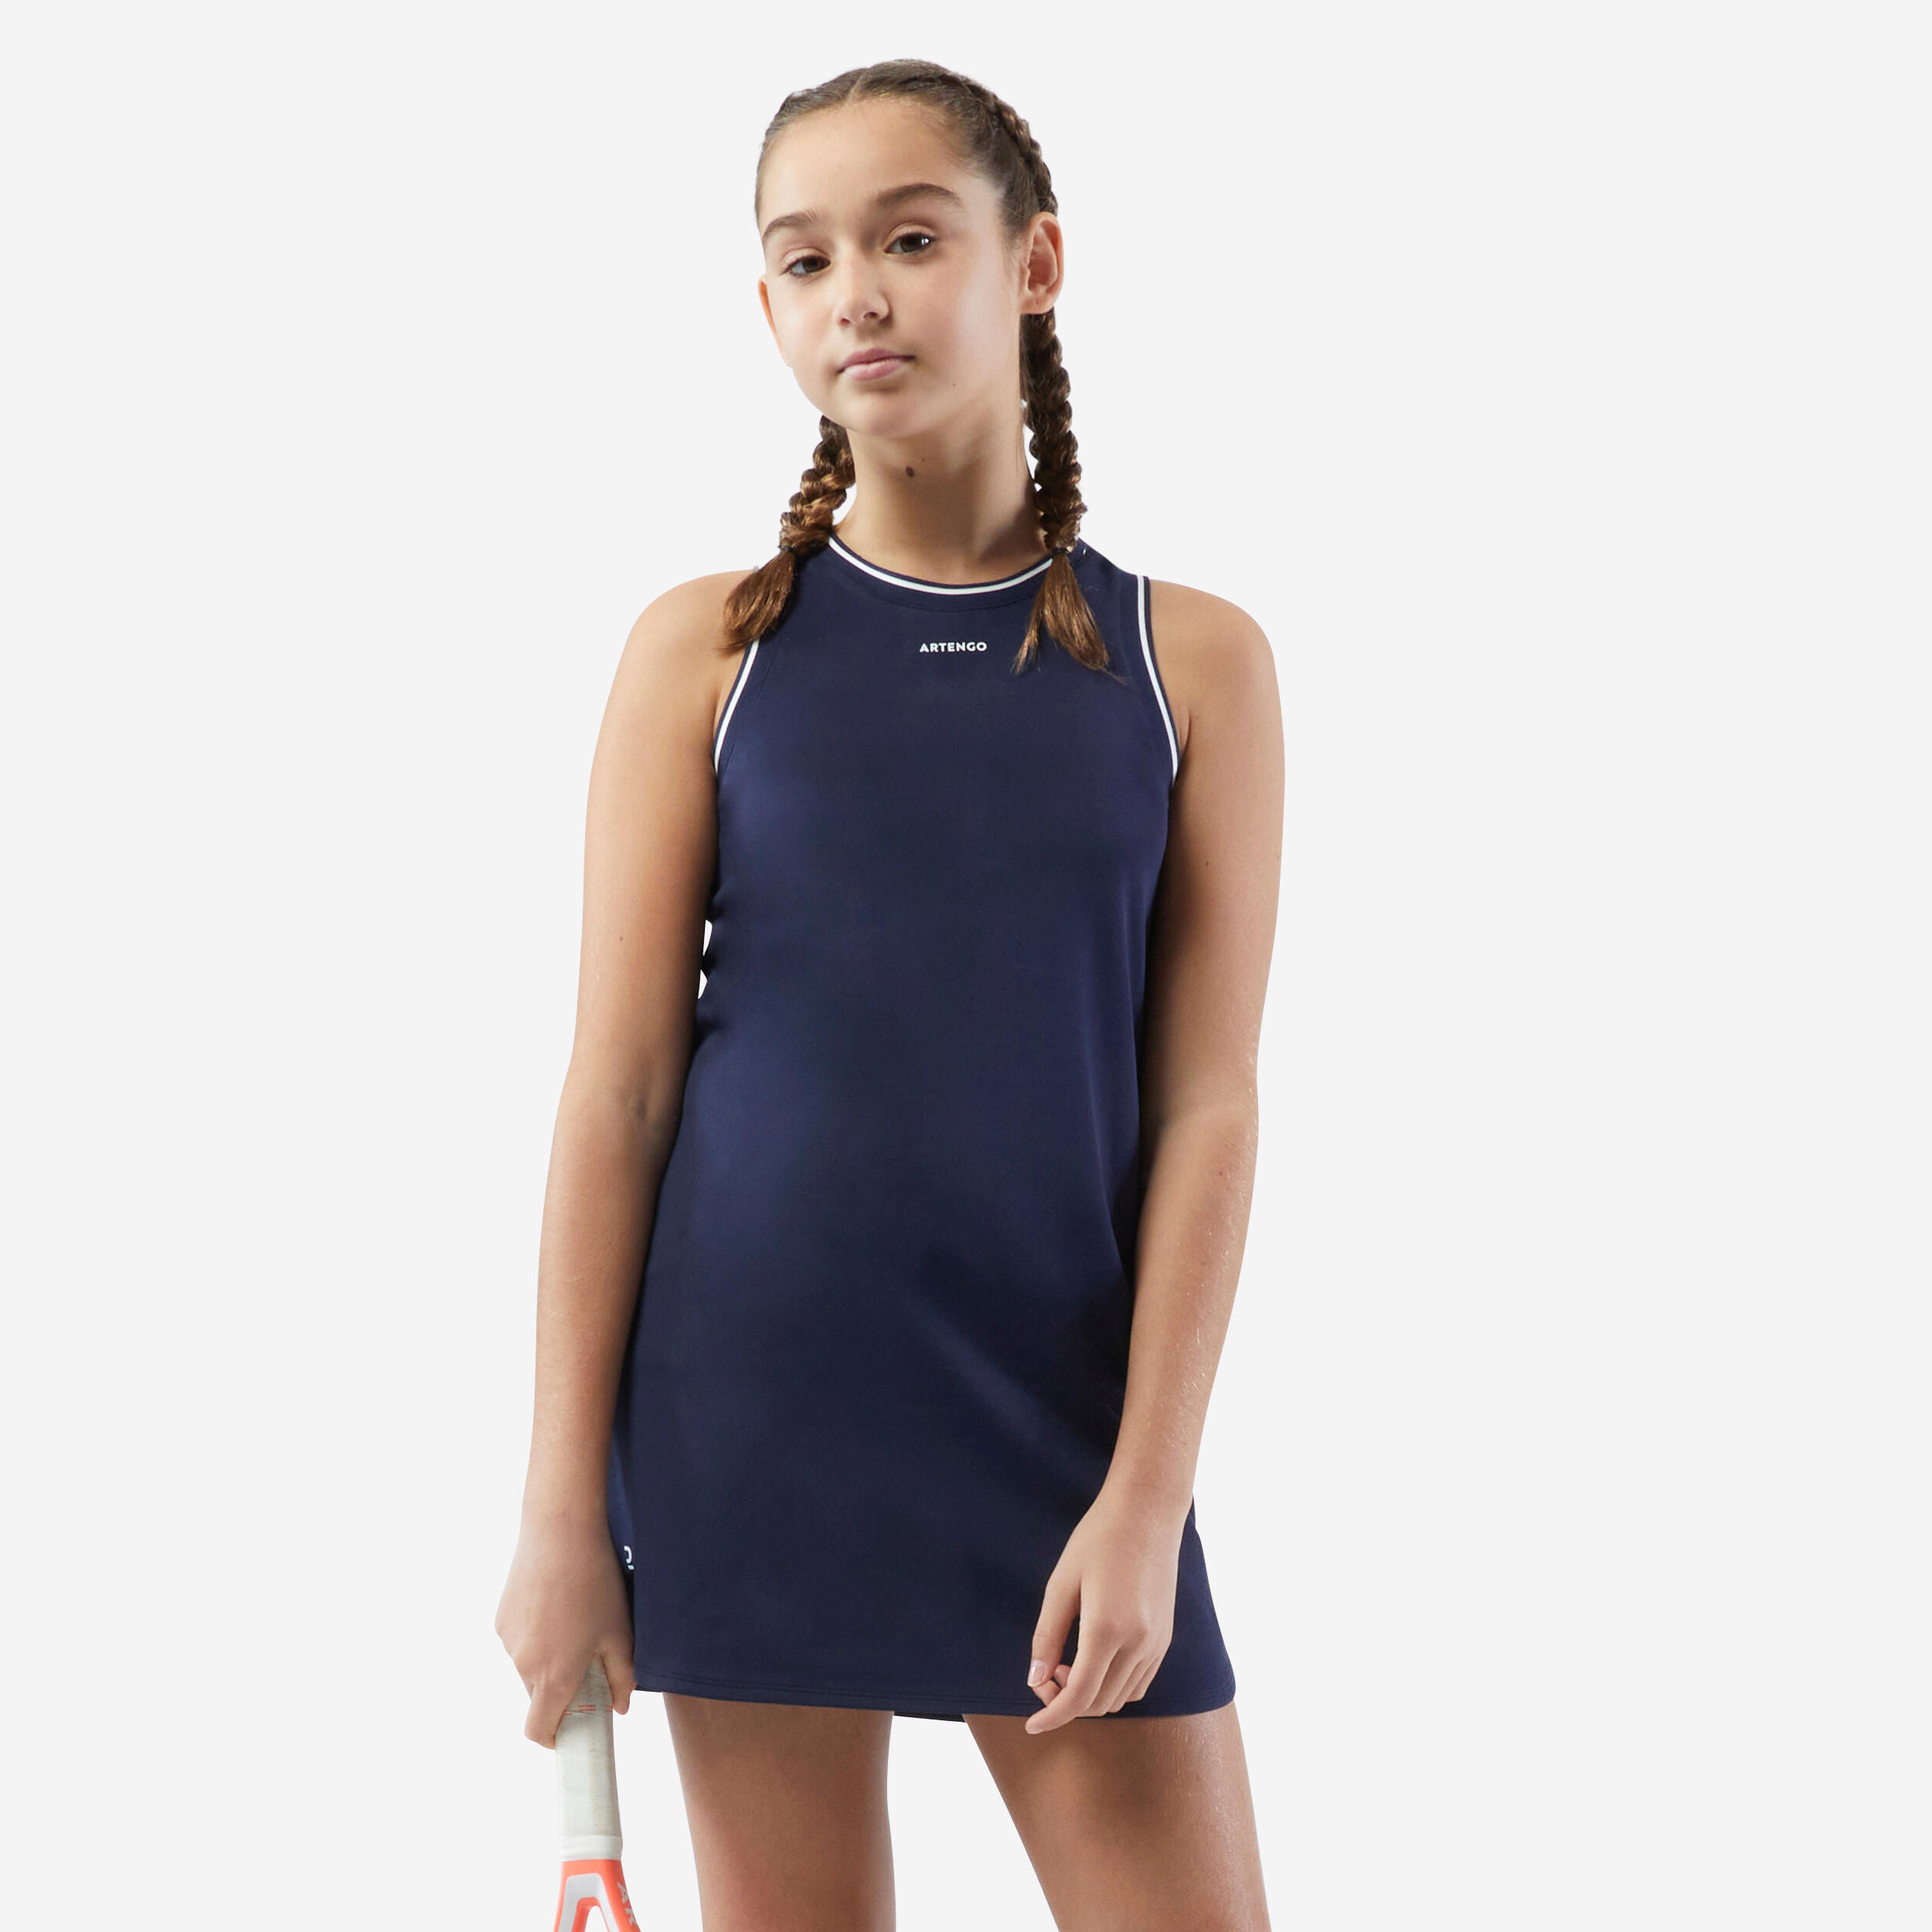 ARTENGO Girls' Straight-Cut Tennis Dress TDR 500 - Navy/White